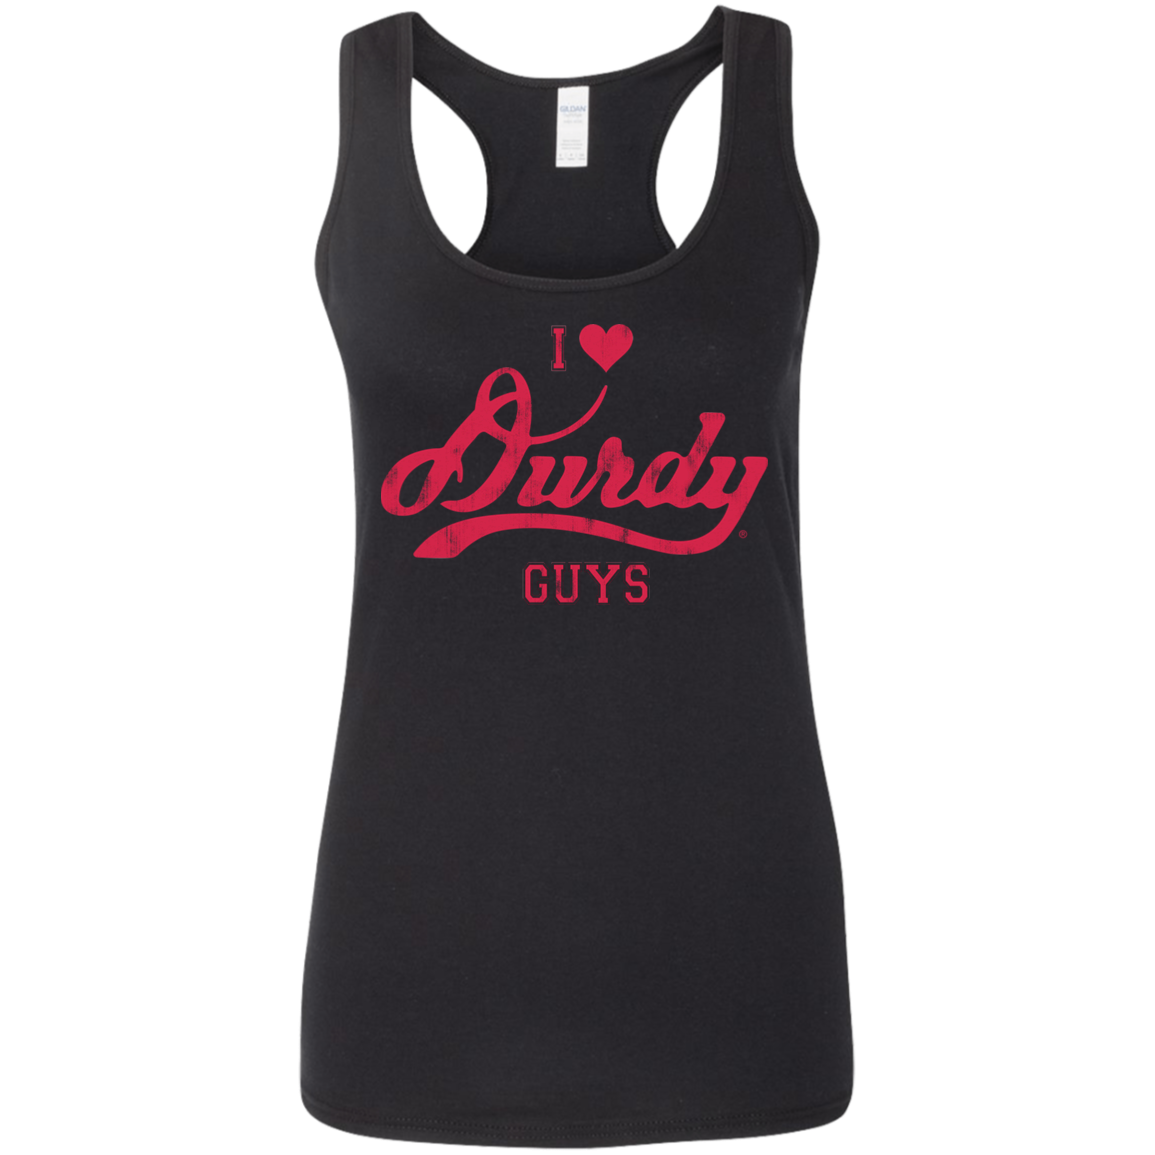 Love Durdy Guys Gildan Ladies' Softstyle Racerback Tank